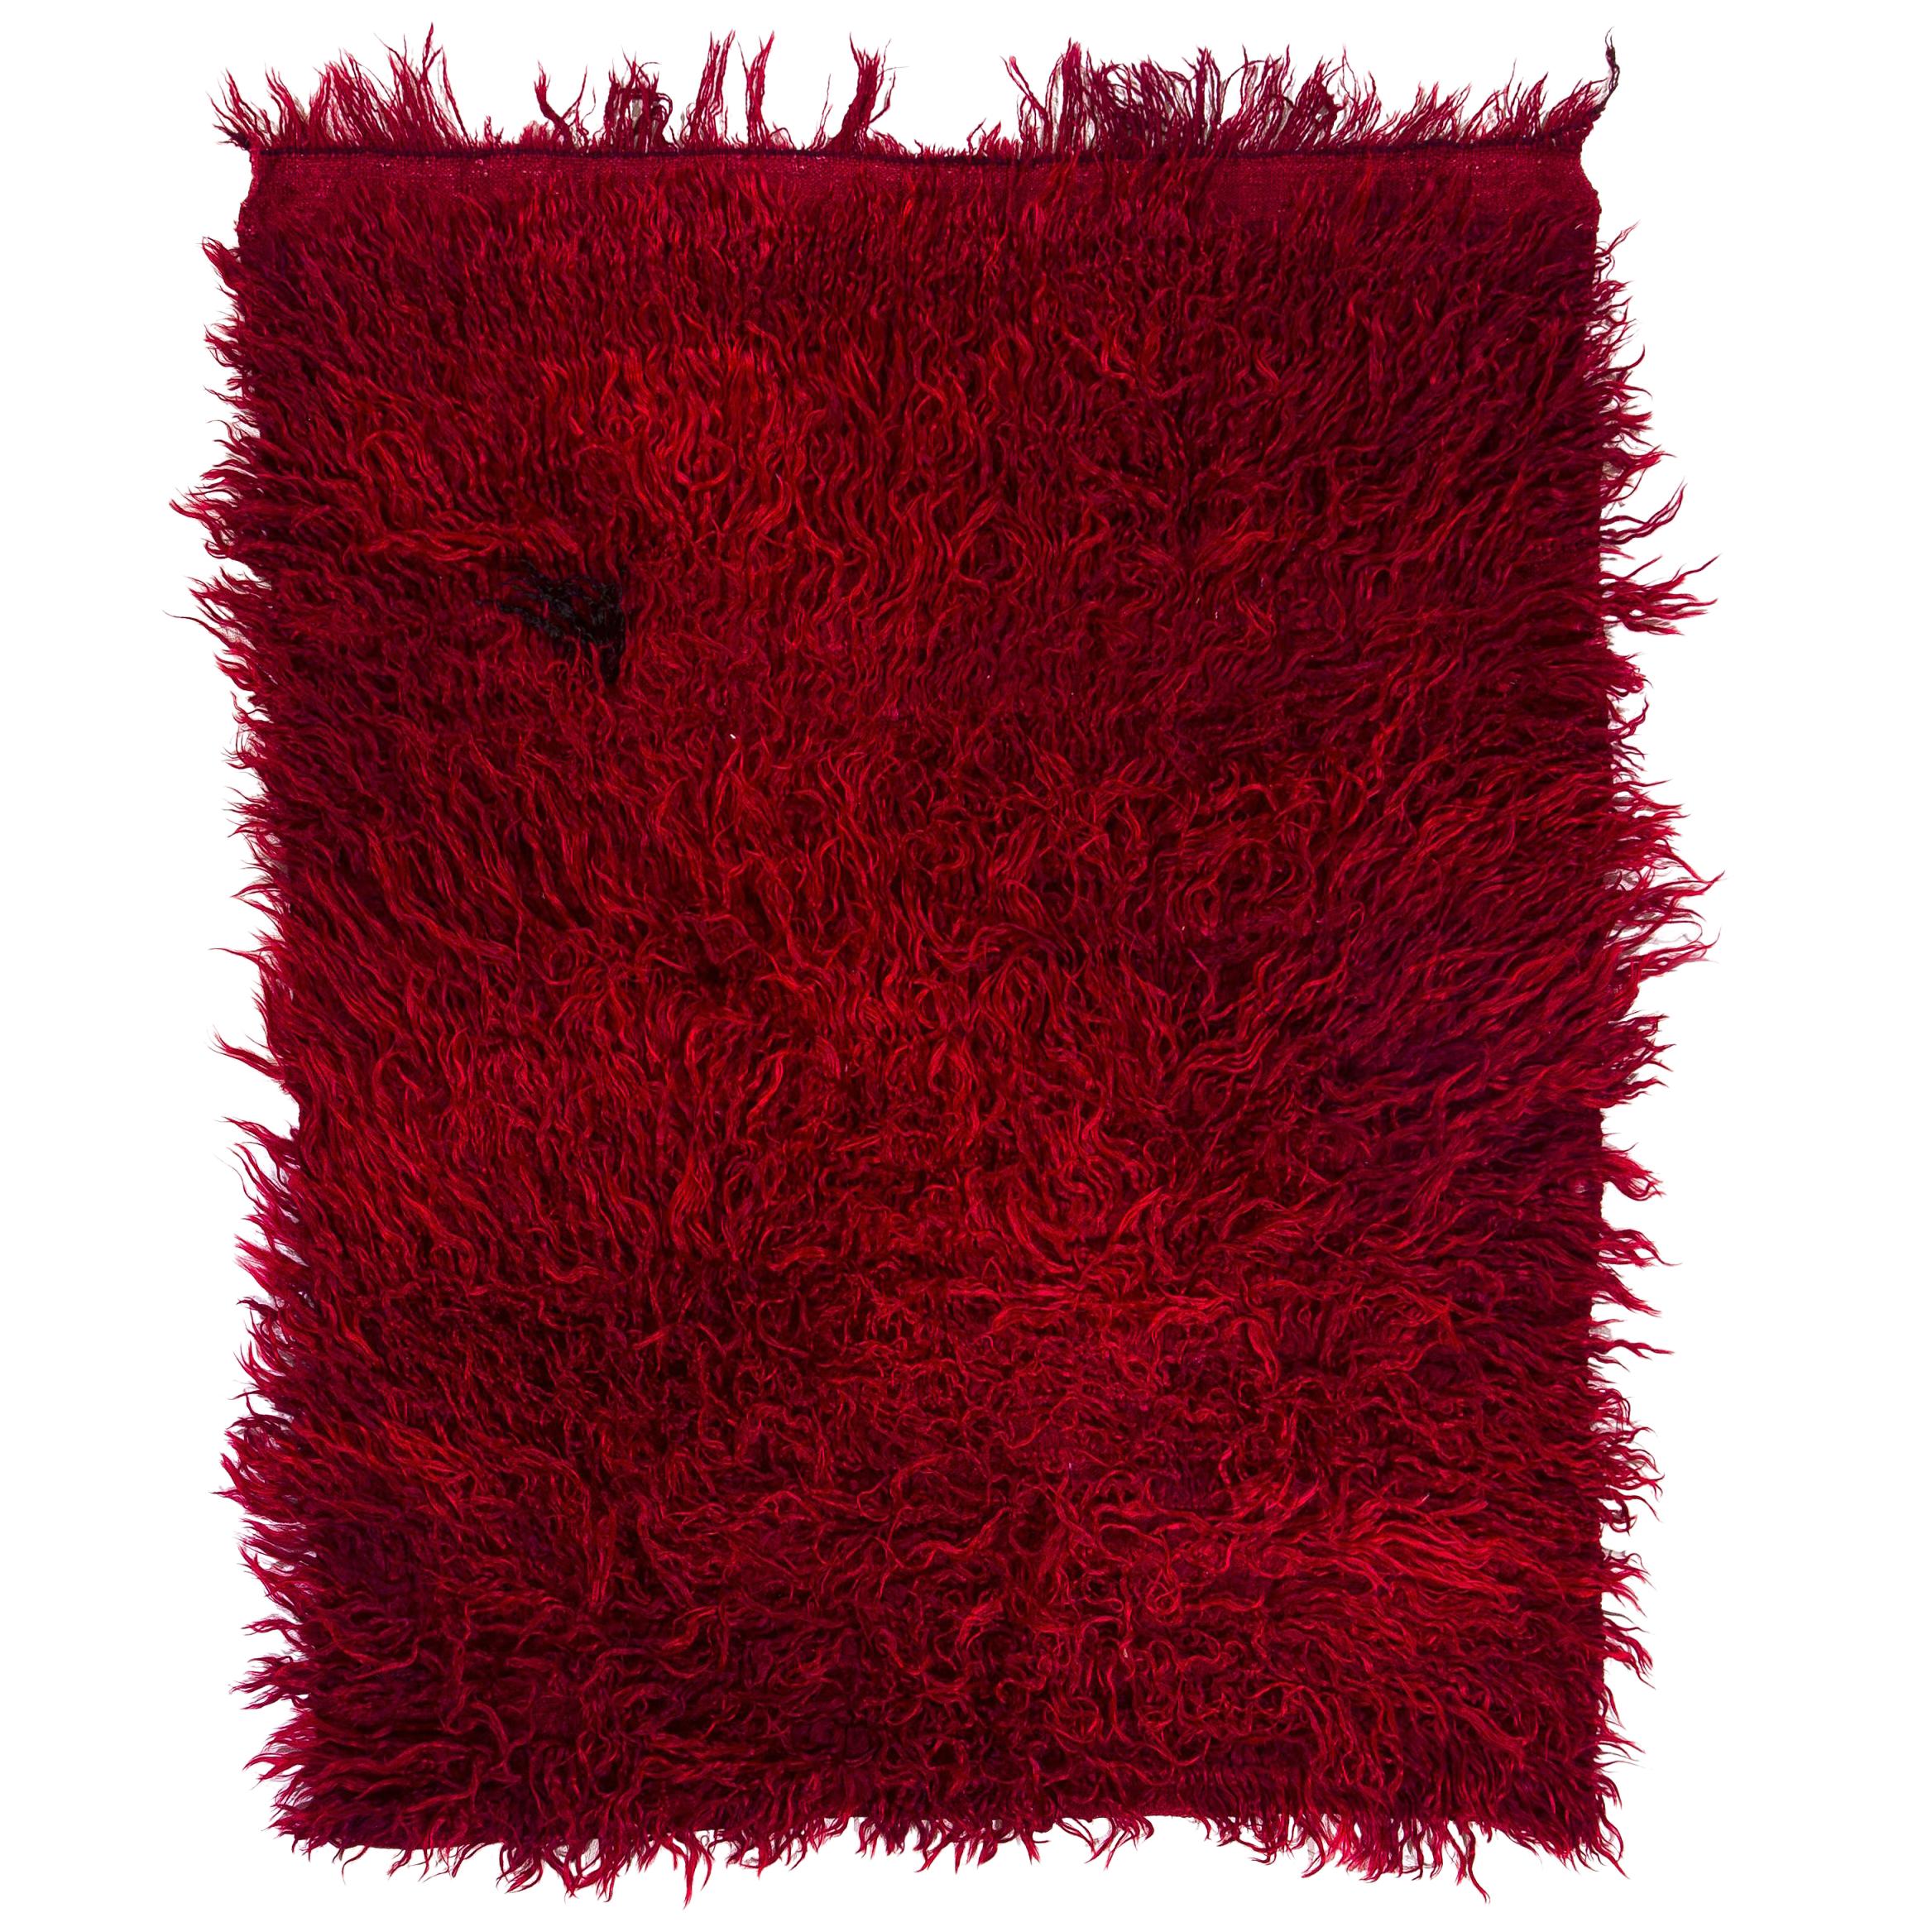 3.7x4.6 Ft Plain Red Mohair "Tulu" Rug, Shag Pile Flokati Style Floor Covering